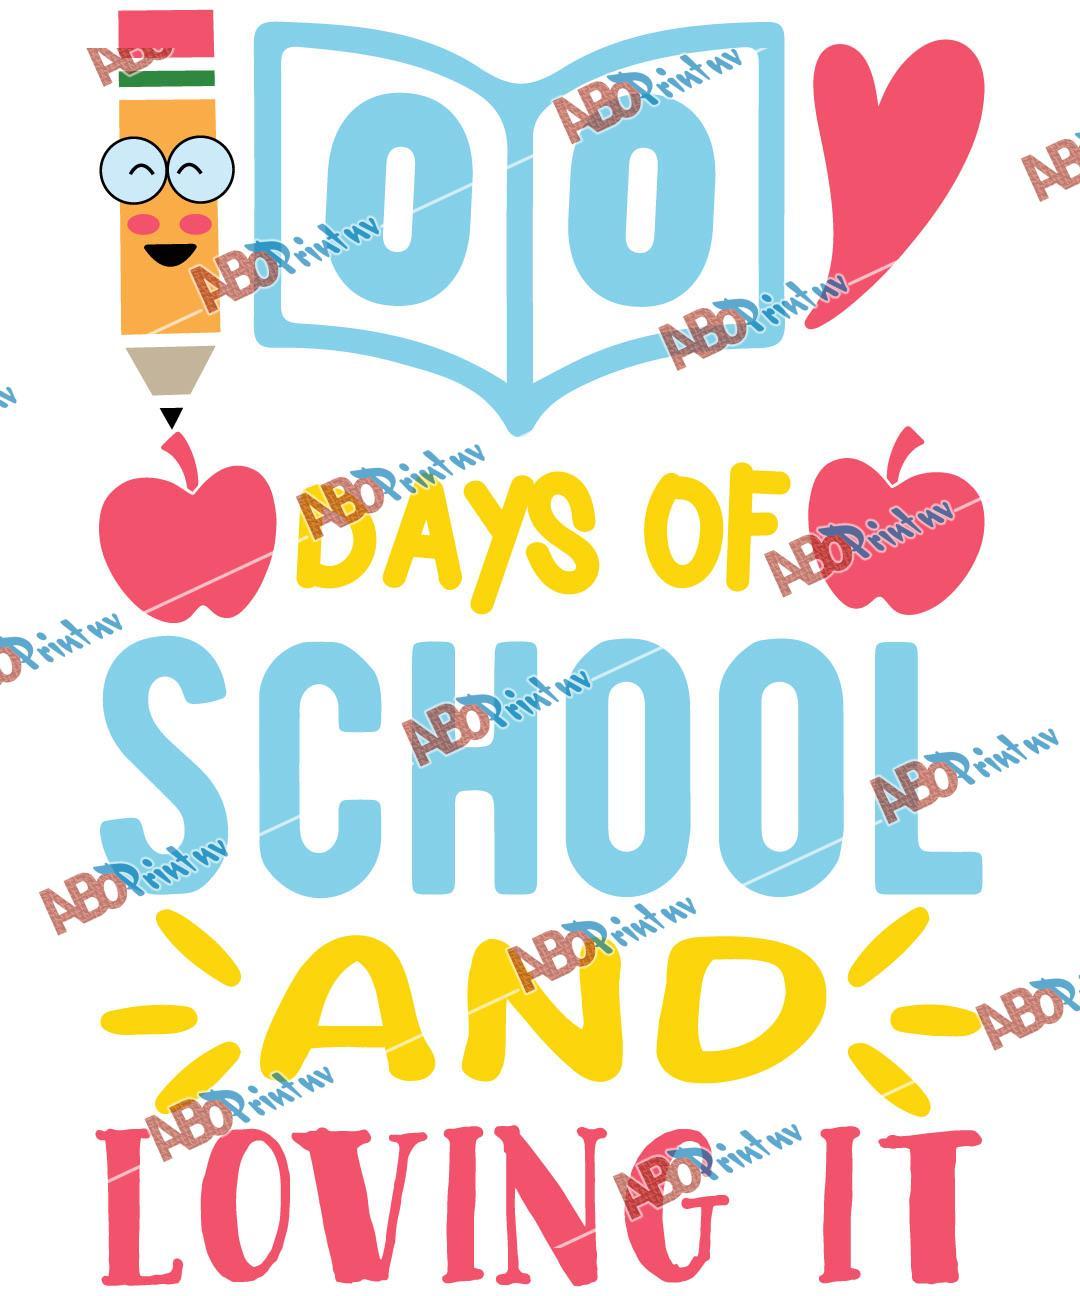 100 days of school and loving it.jpg